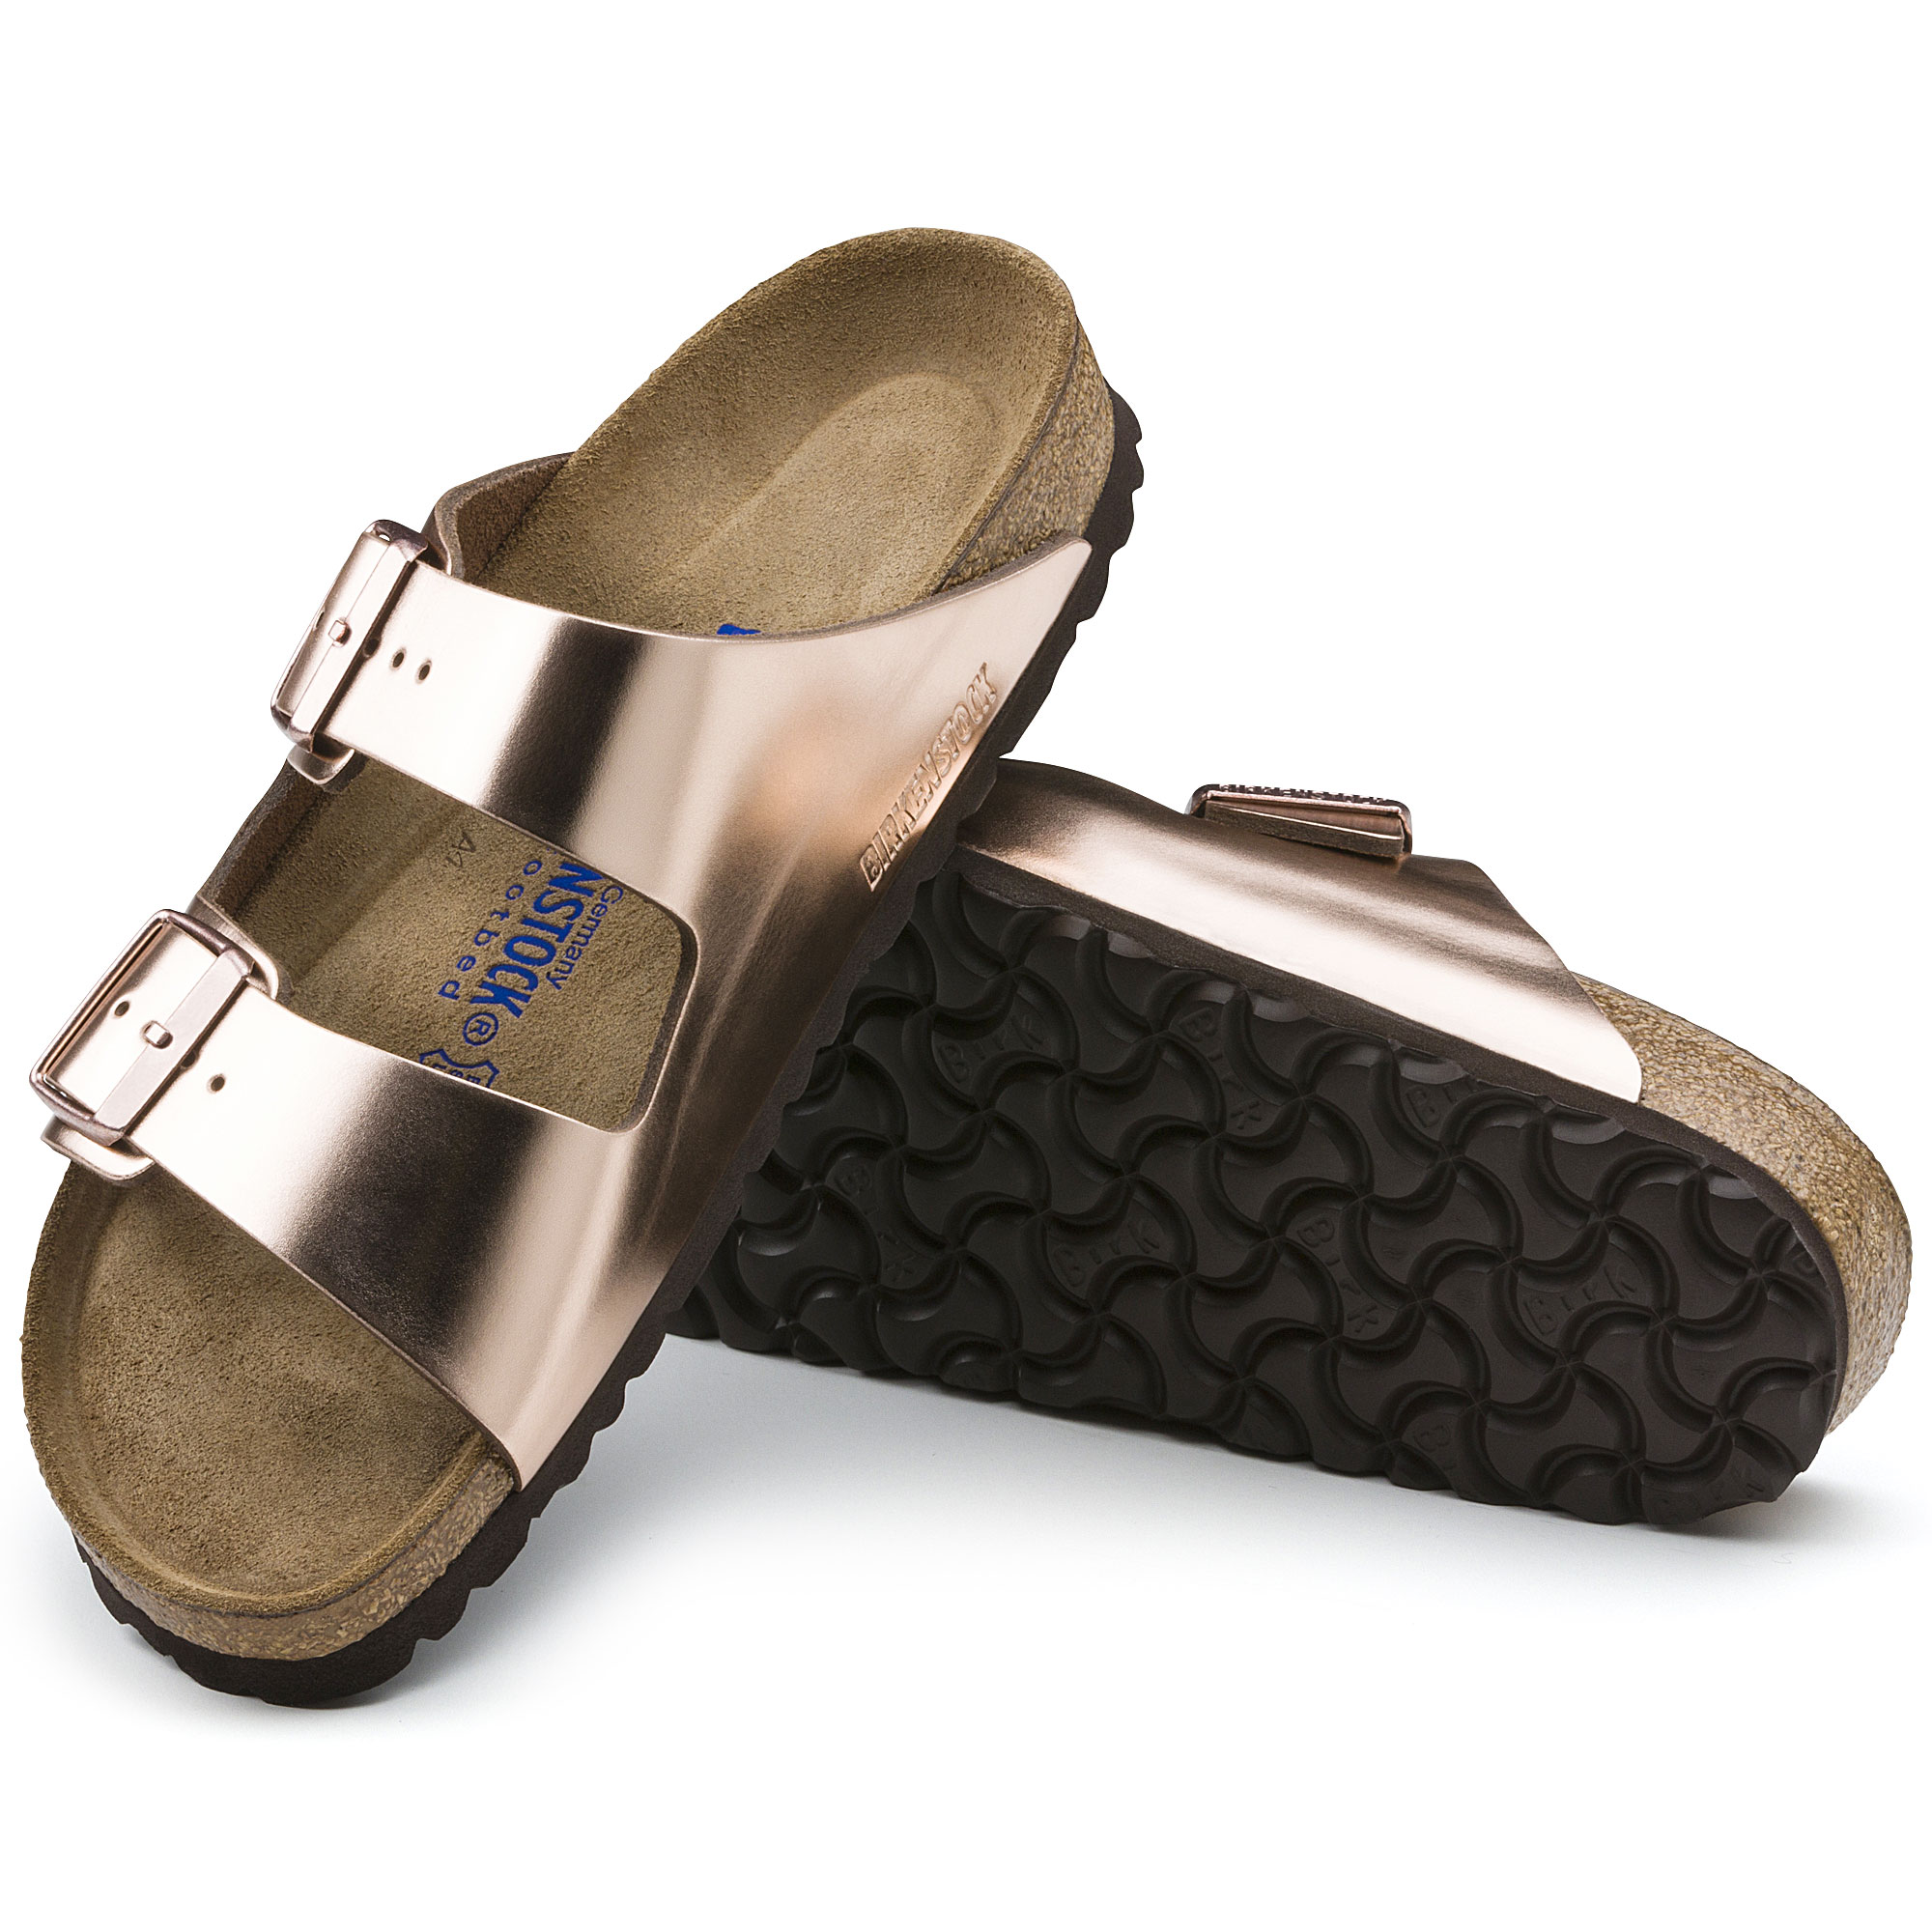 birkenstock arizona metallic soft footbed sandal copper